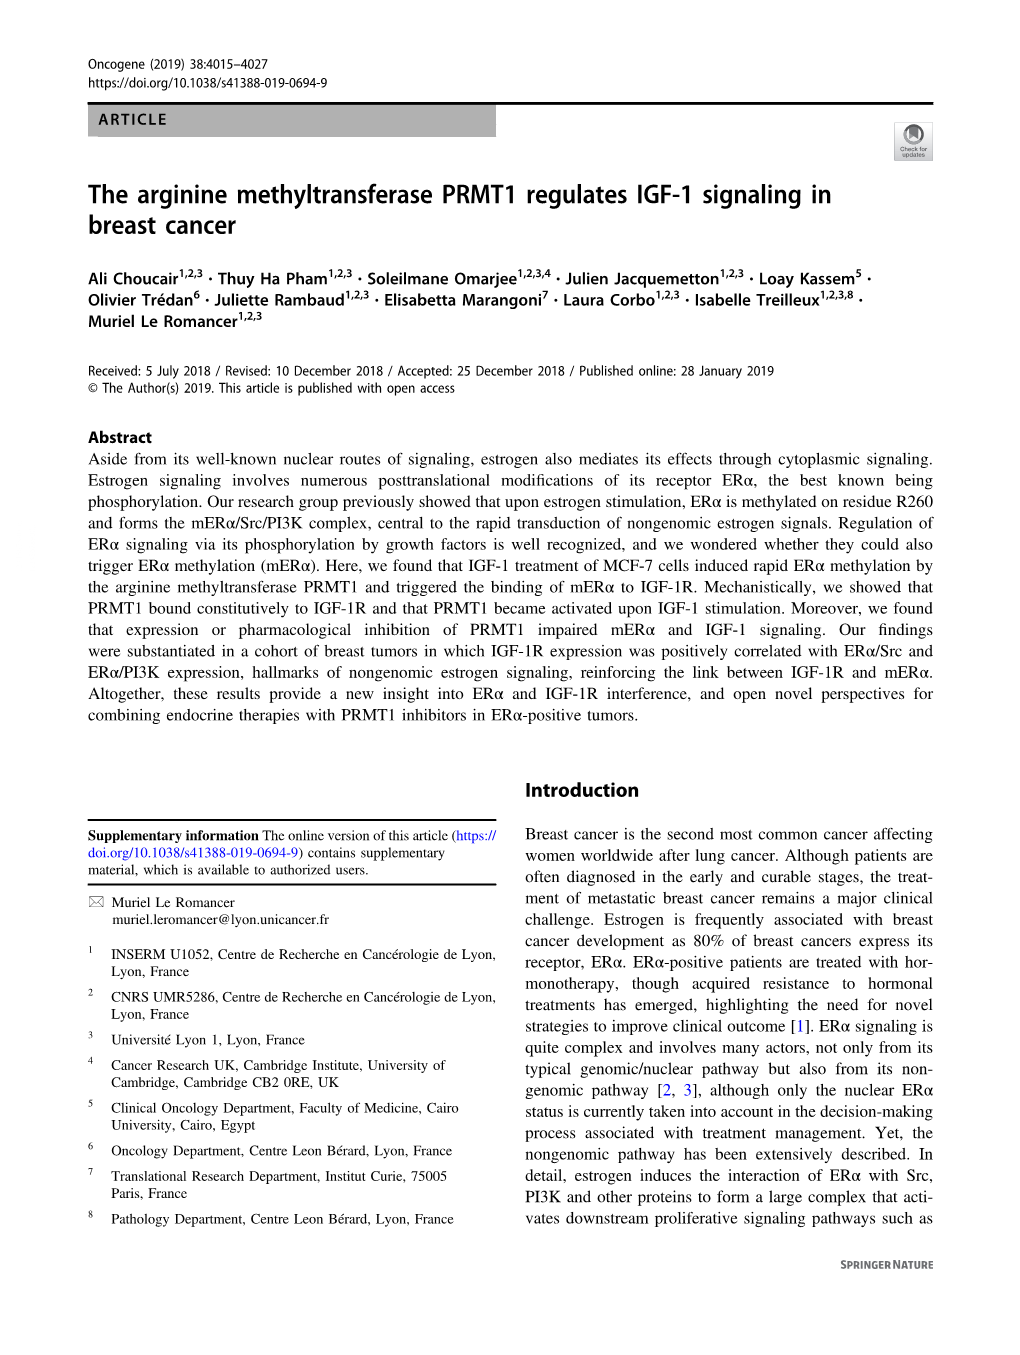 The Arginine Methyltransferase PRMT1 Regulates IGF-1 Signaling in Breast Cancer